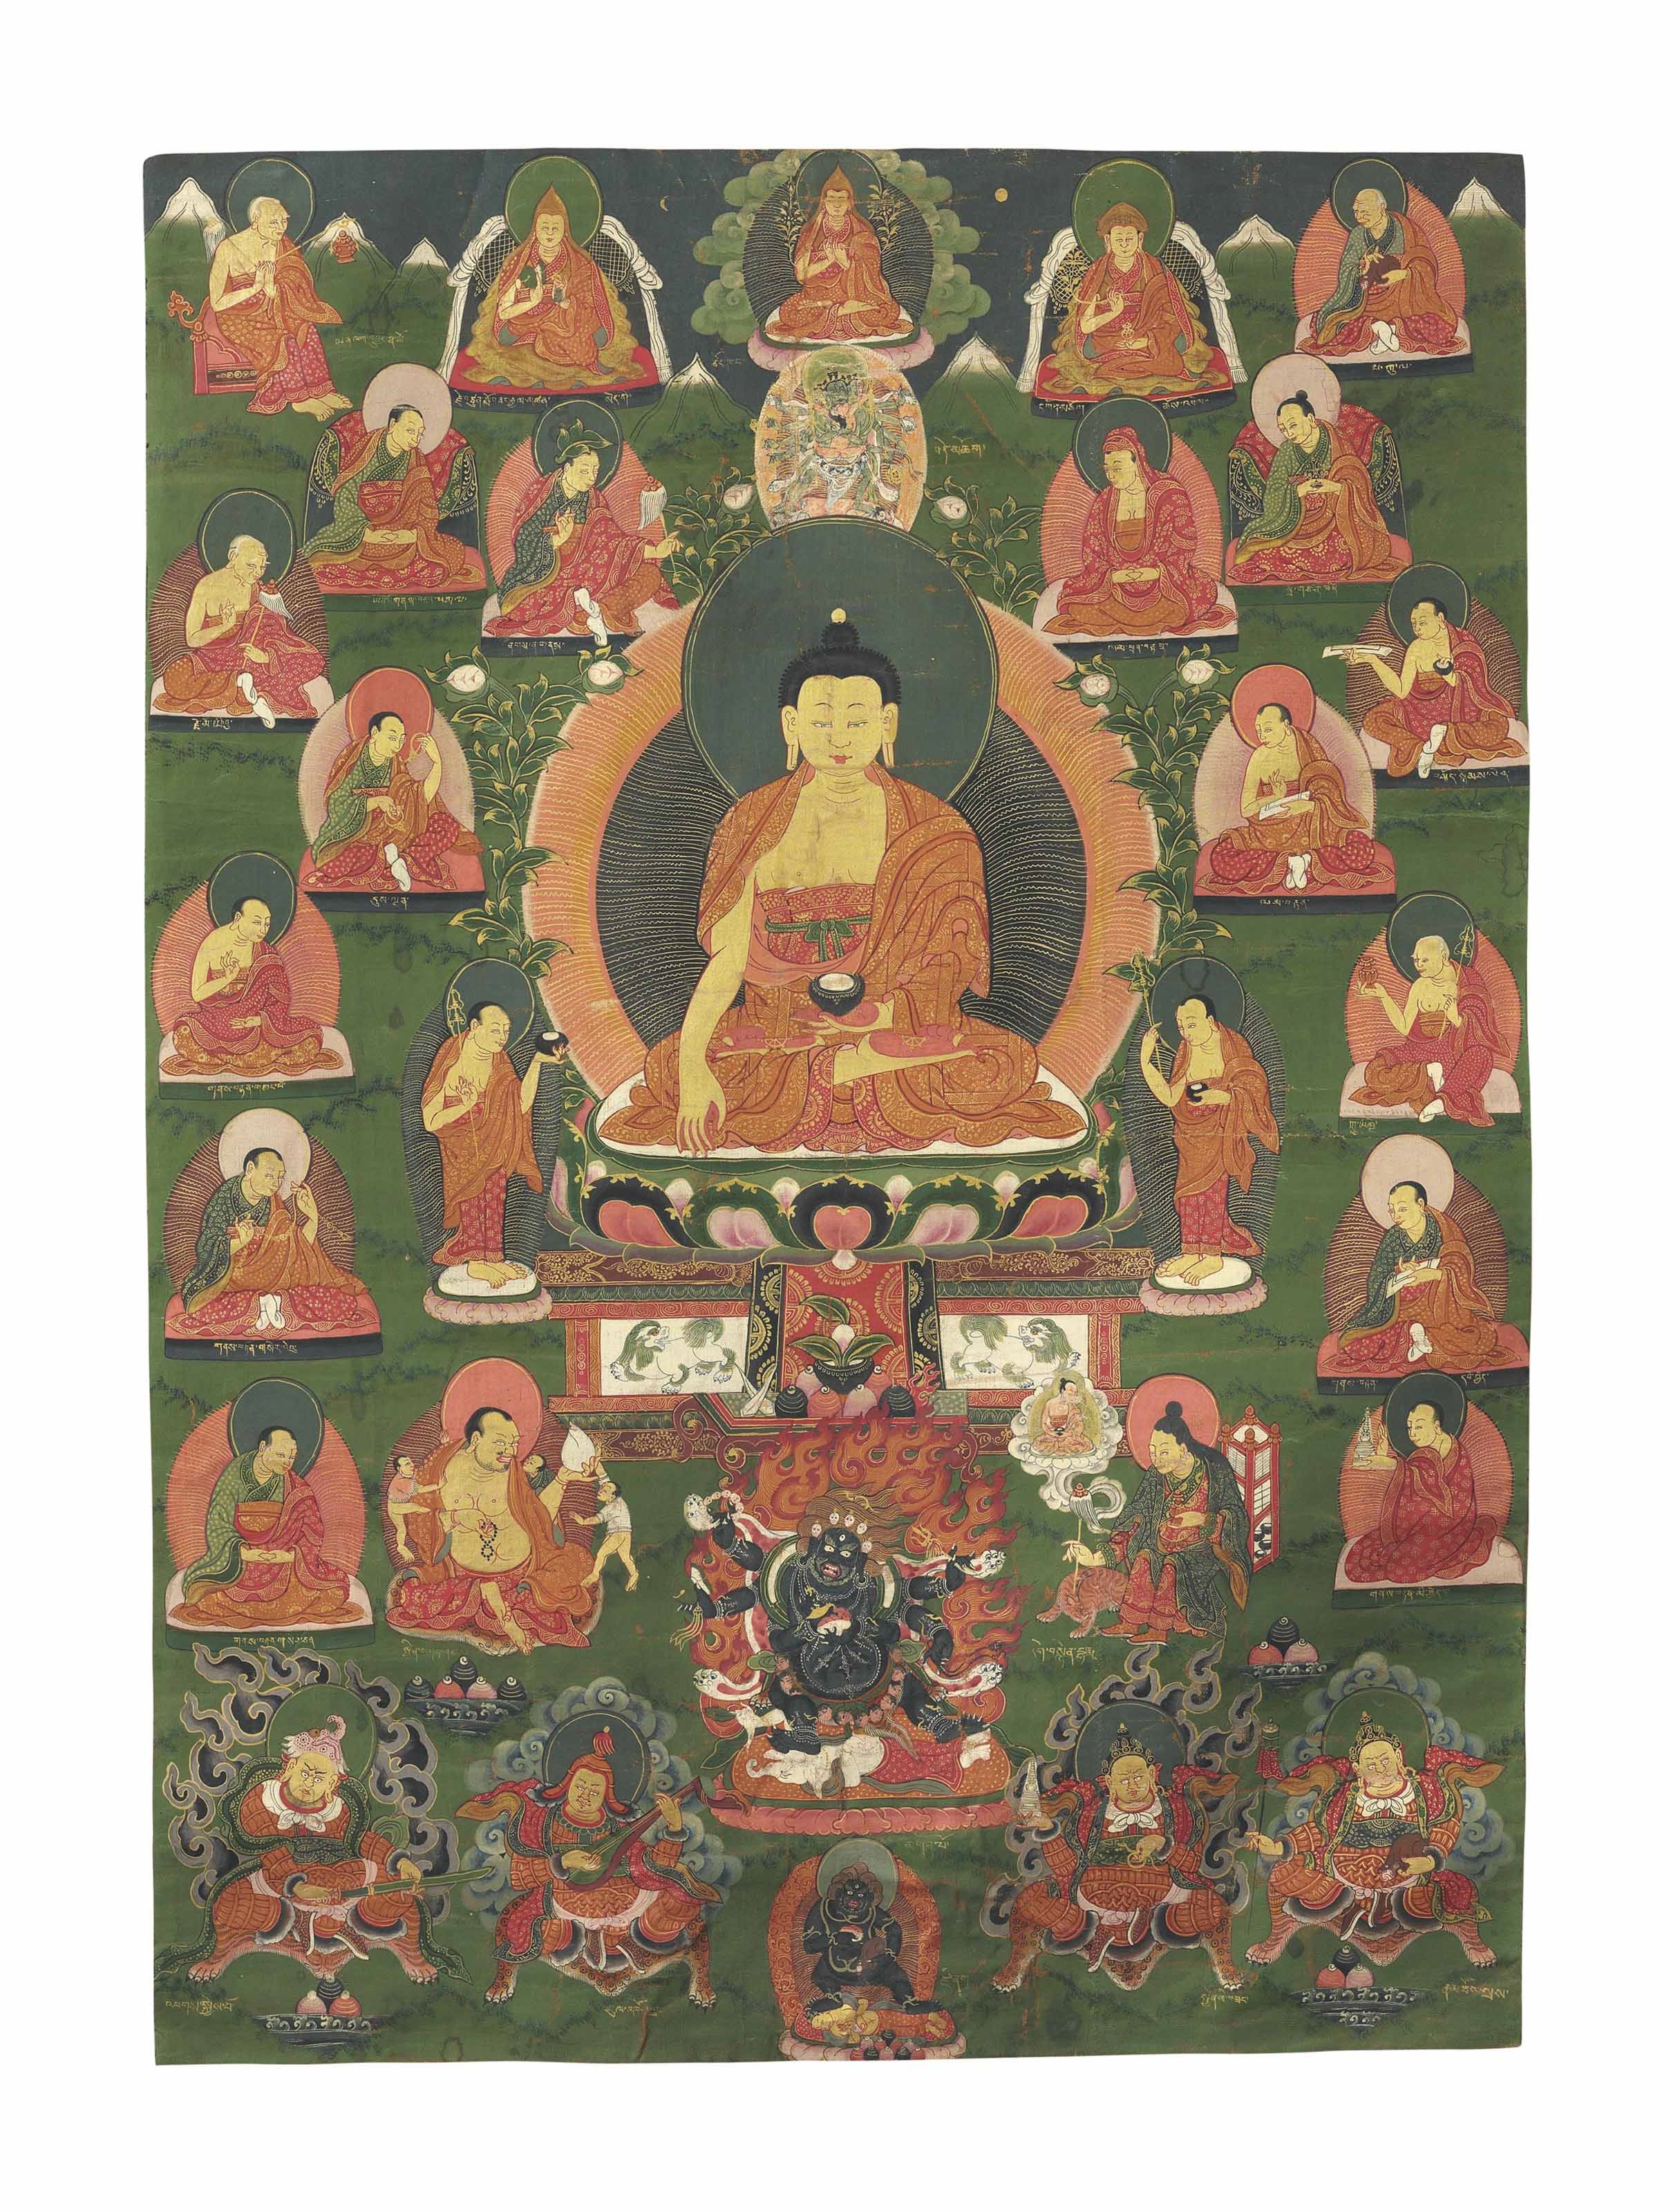 A PAINTING OF BUDDHA SHAKYAMUNI AND THE SIXTEEN ARHATS by Tibetan School, 18th Century, 18TH CENTURY